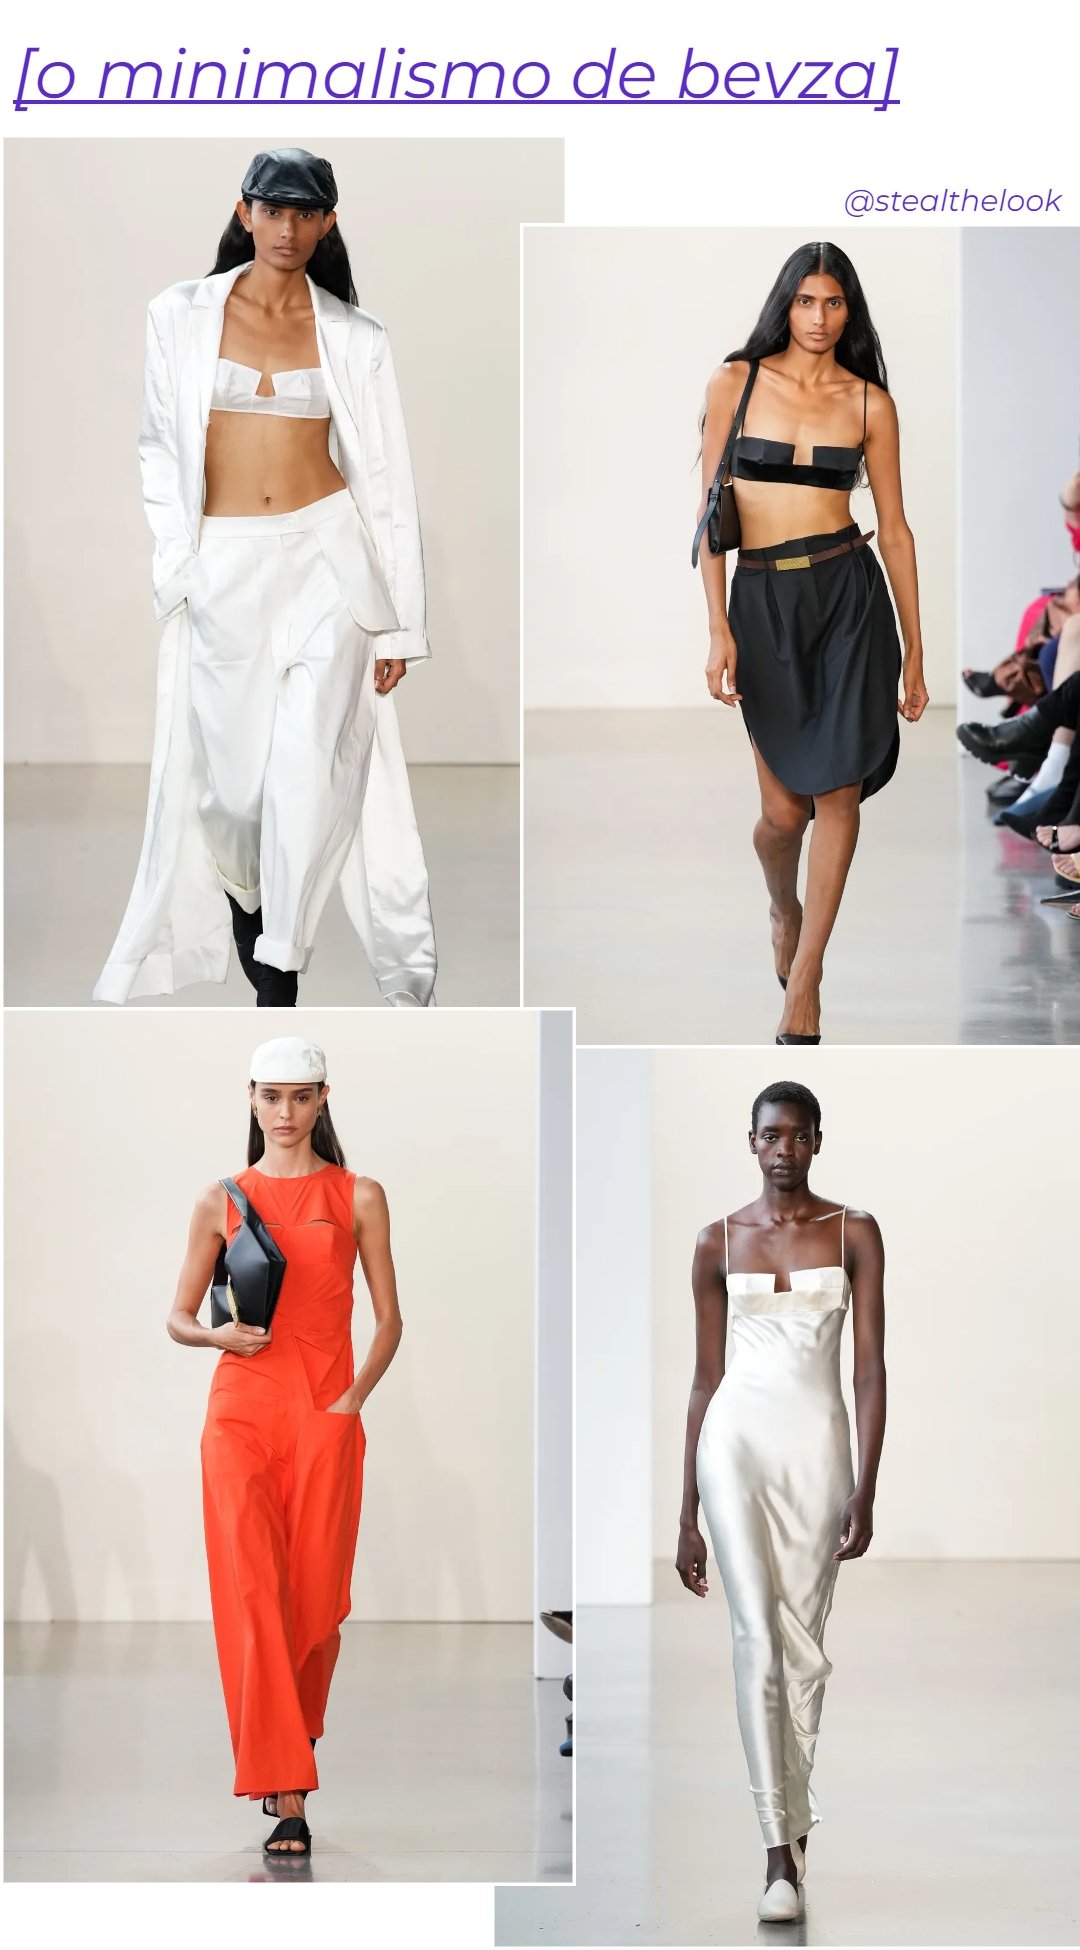 Bevza - roupas minimalistas diversas - NYFW - primavera - colagem de imagens - https://stealthelook.com.br